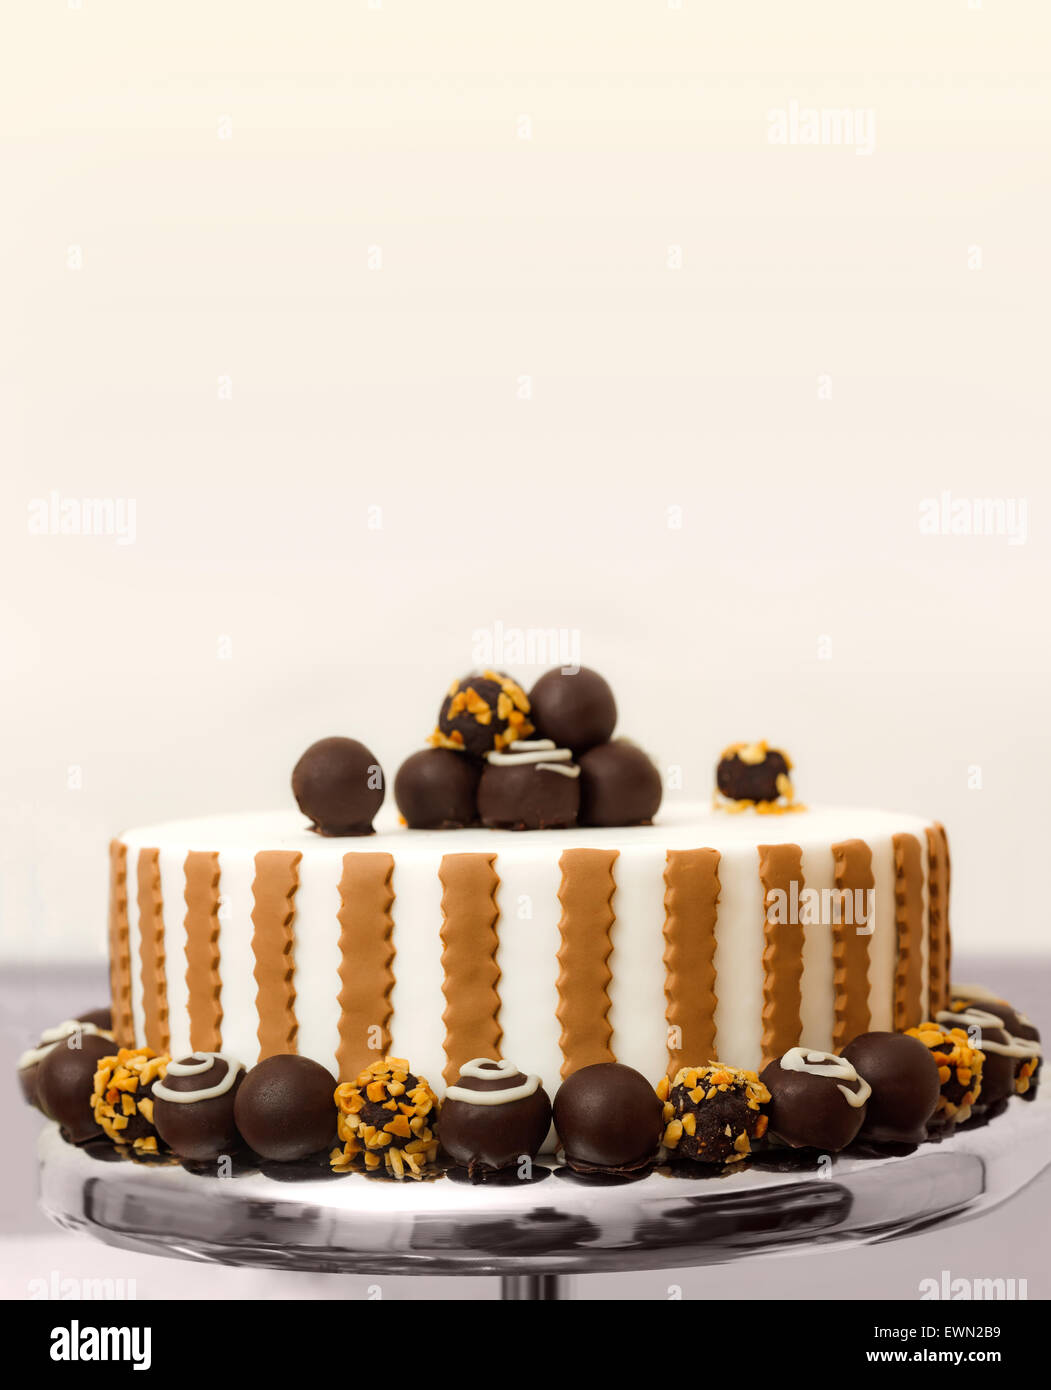 Chocolate bonbon cake on plate. Copy space above Stock Photo   Alamy